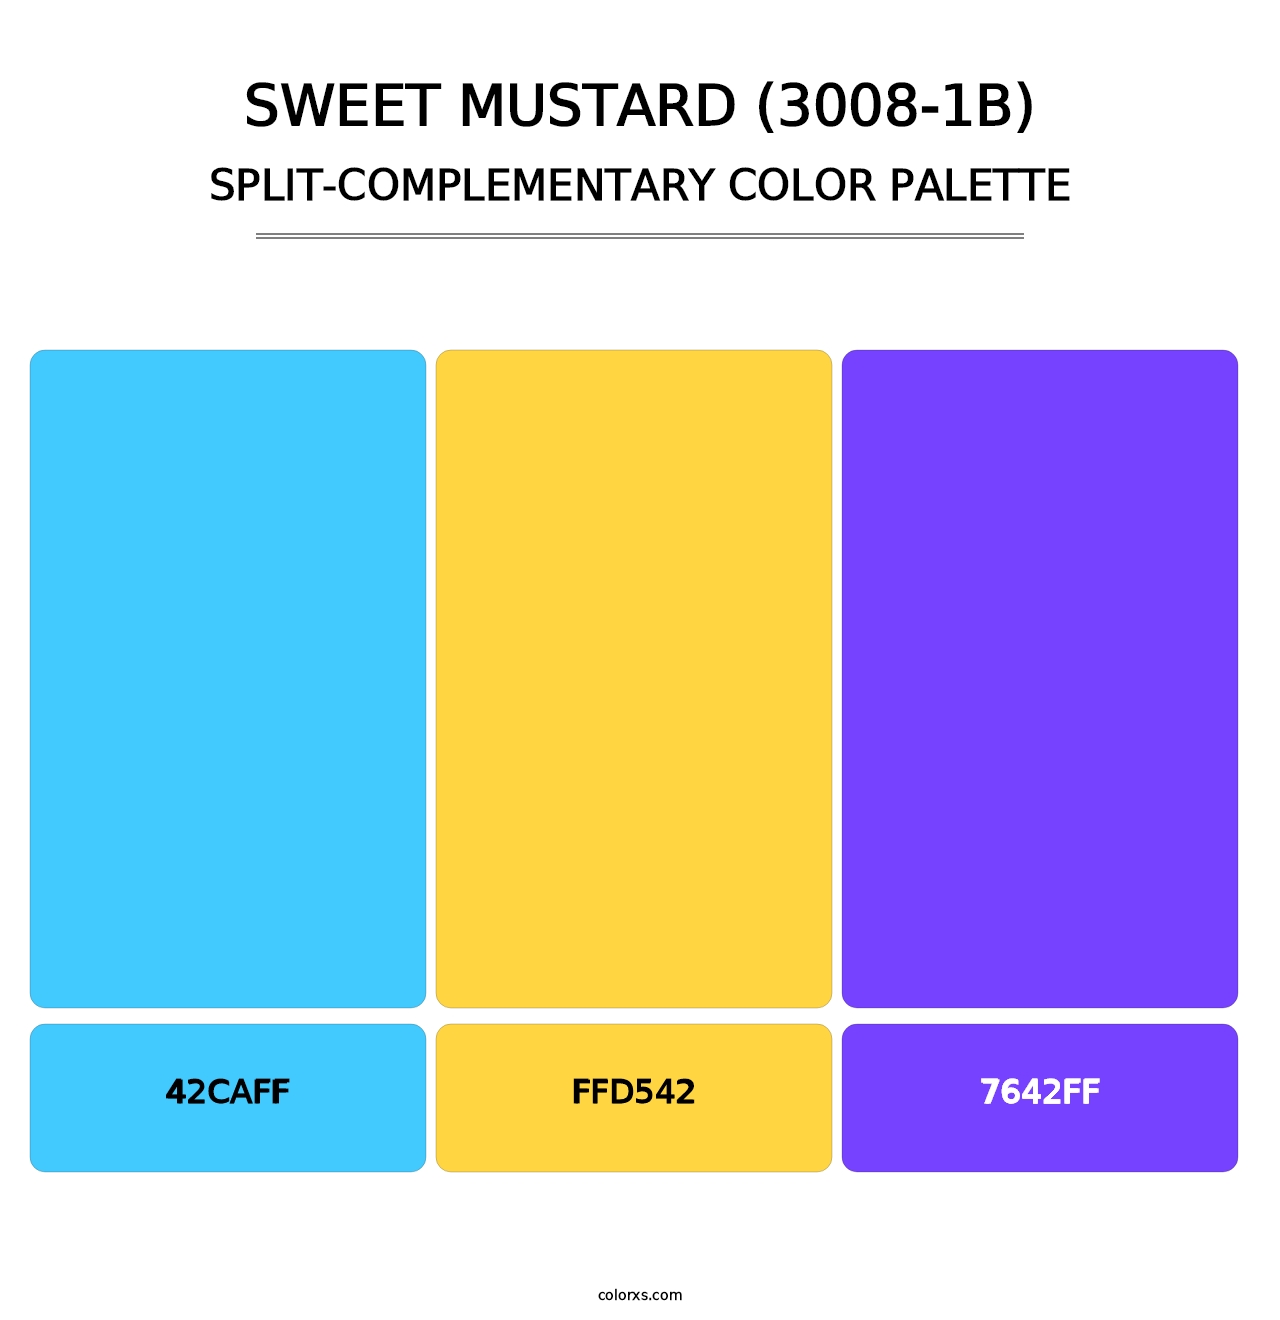 Sweet Mustard (3008-1B) - Split-Complementary Color Palette